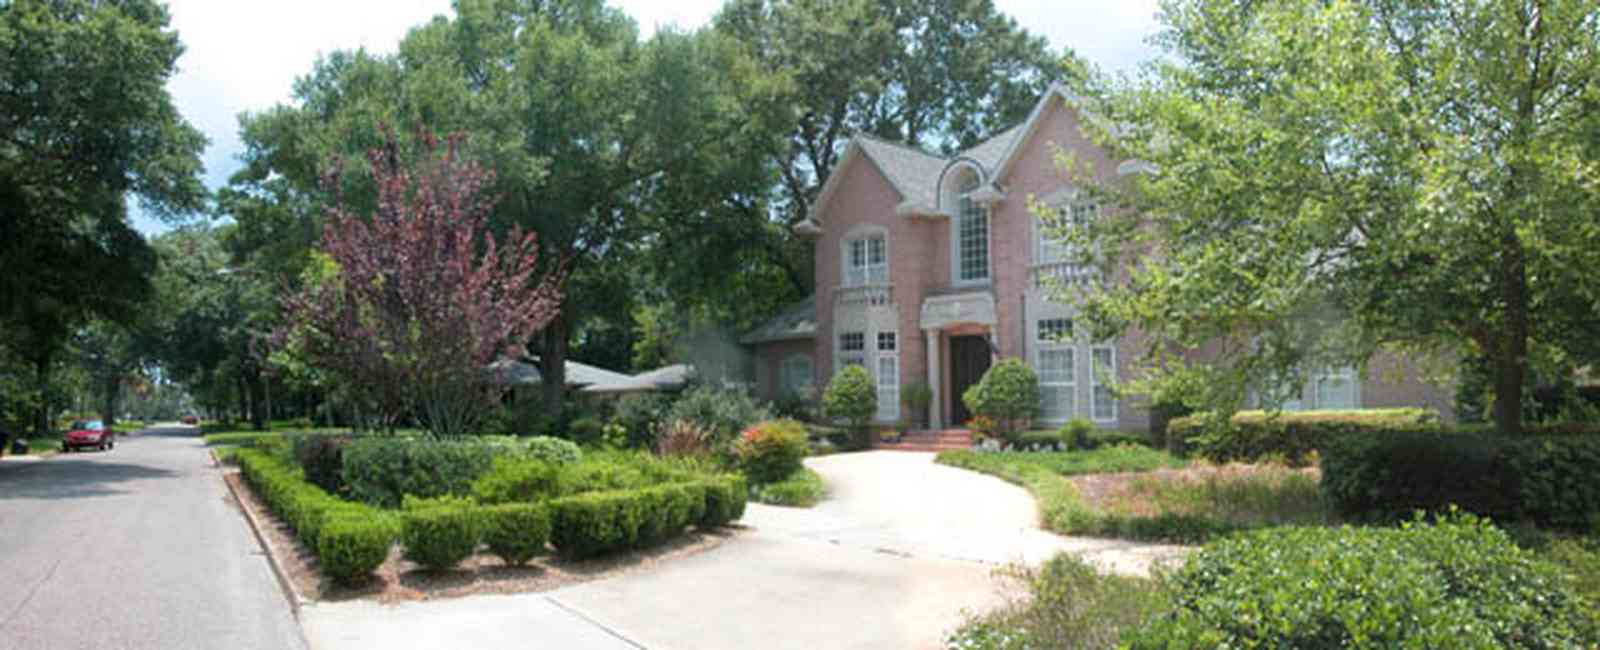 East-Hill:-617-19th-Avenue_07.jpg:  boxwood hedge, pink brick house, circular driveway, oak trees, river birch tree